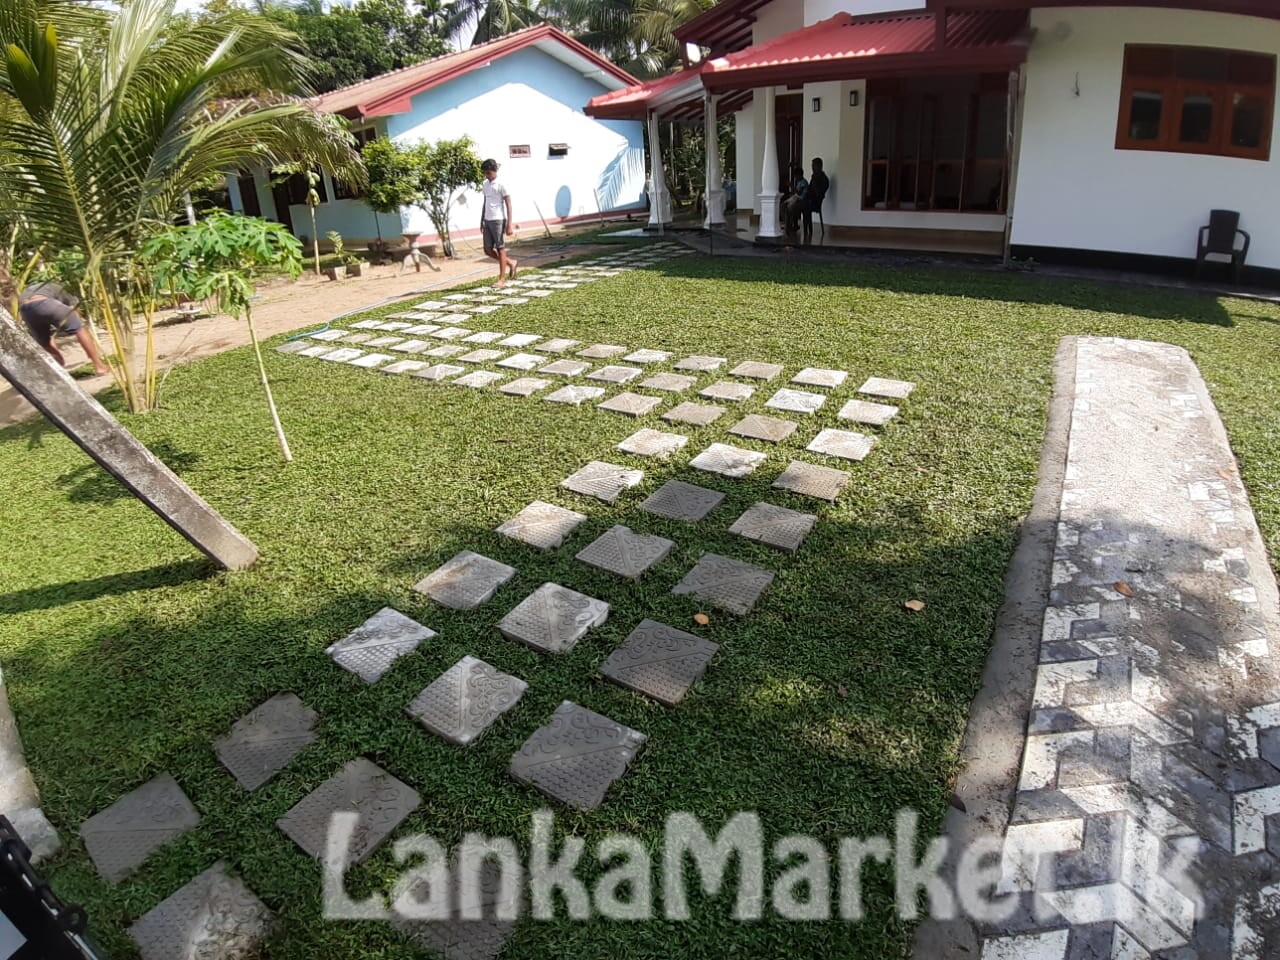 Landscaping service with Malasiyan carpet grass